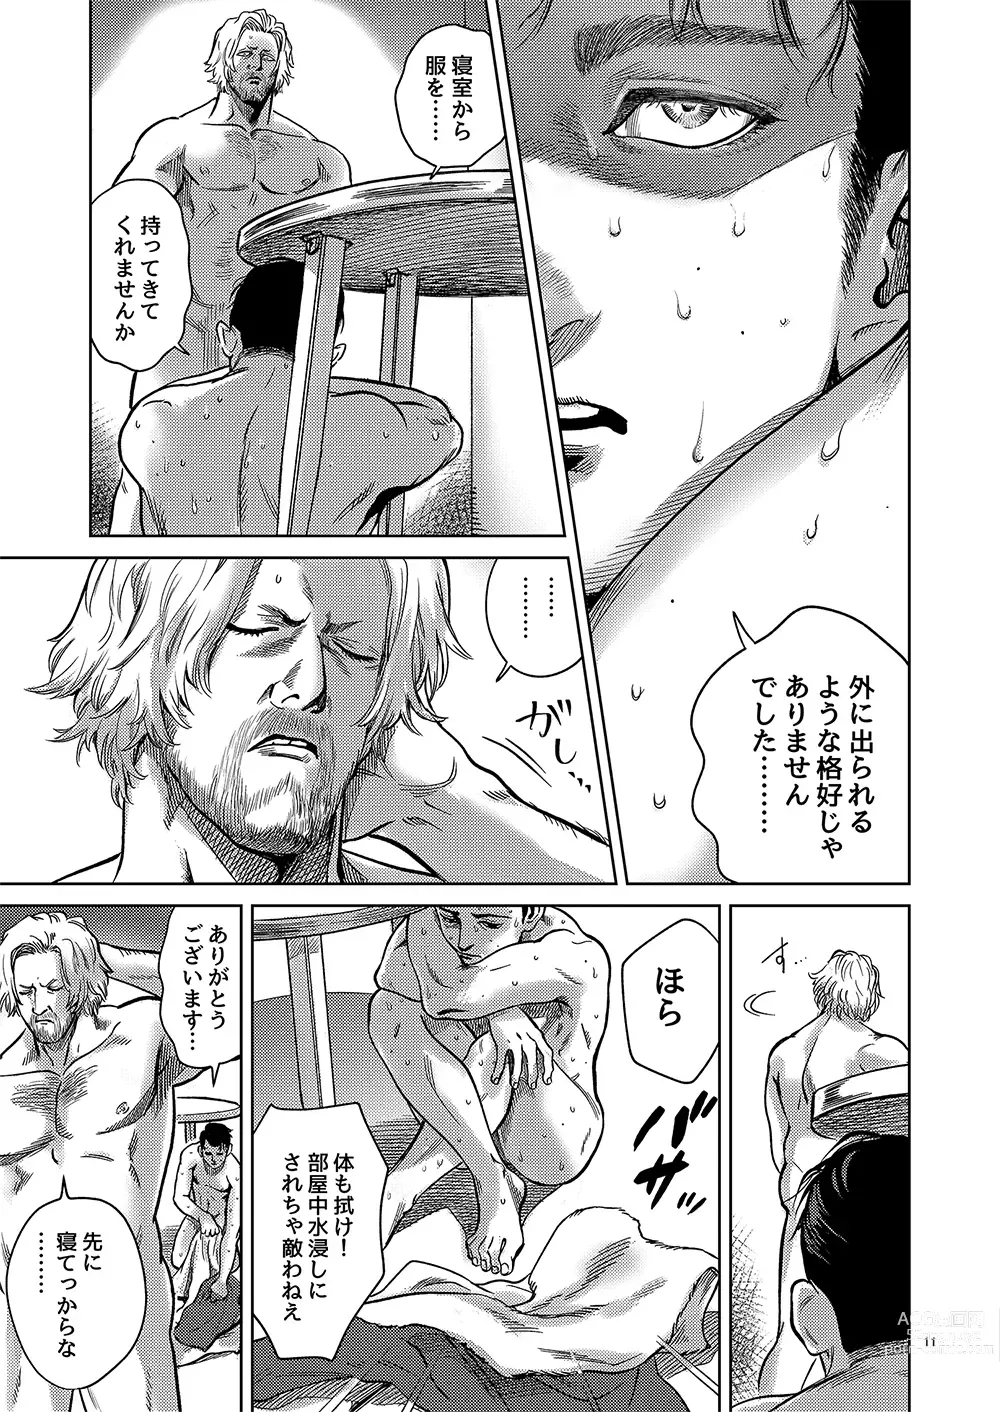 Page 10 of doujinshi Distortion